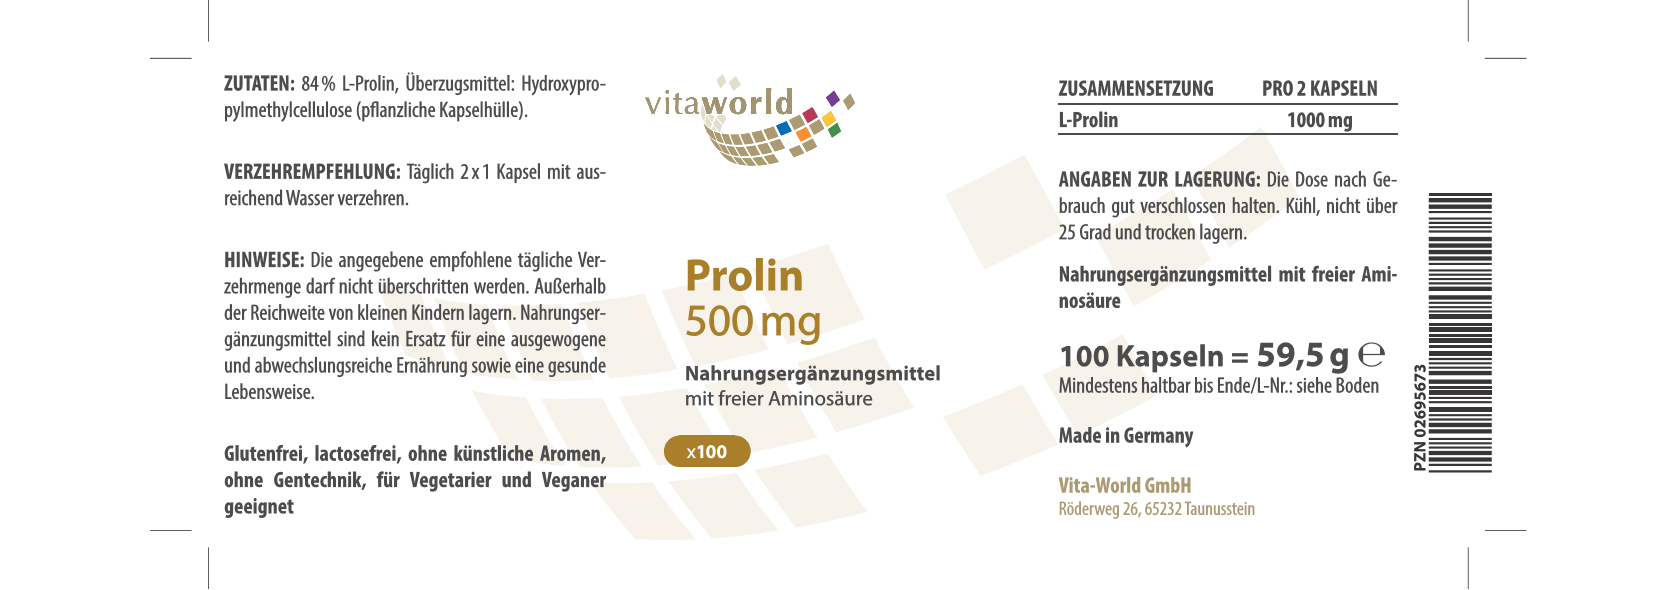 Prolin 500 mg (100 Kps)